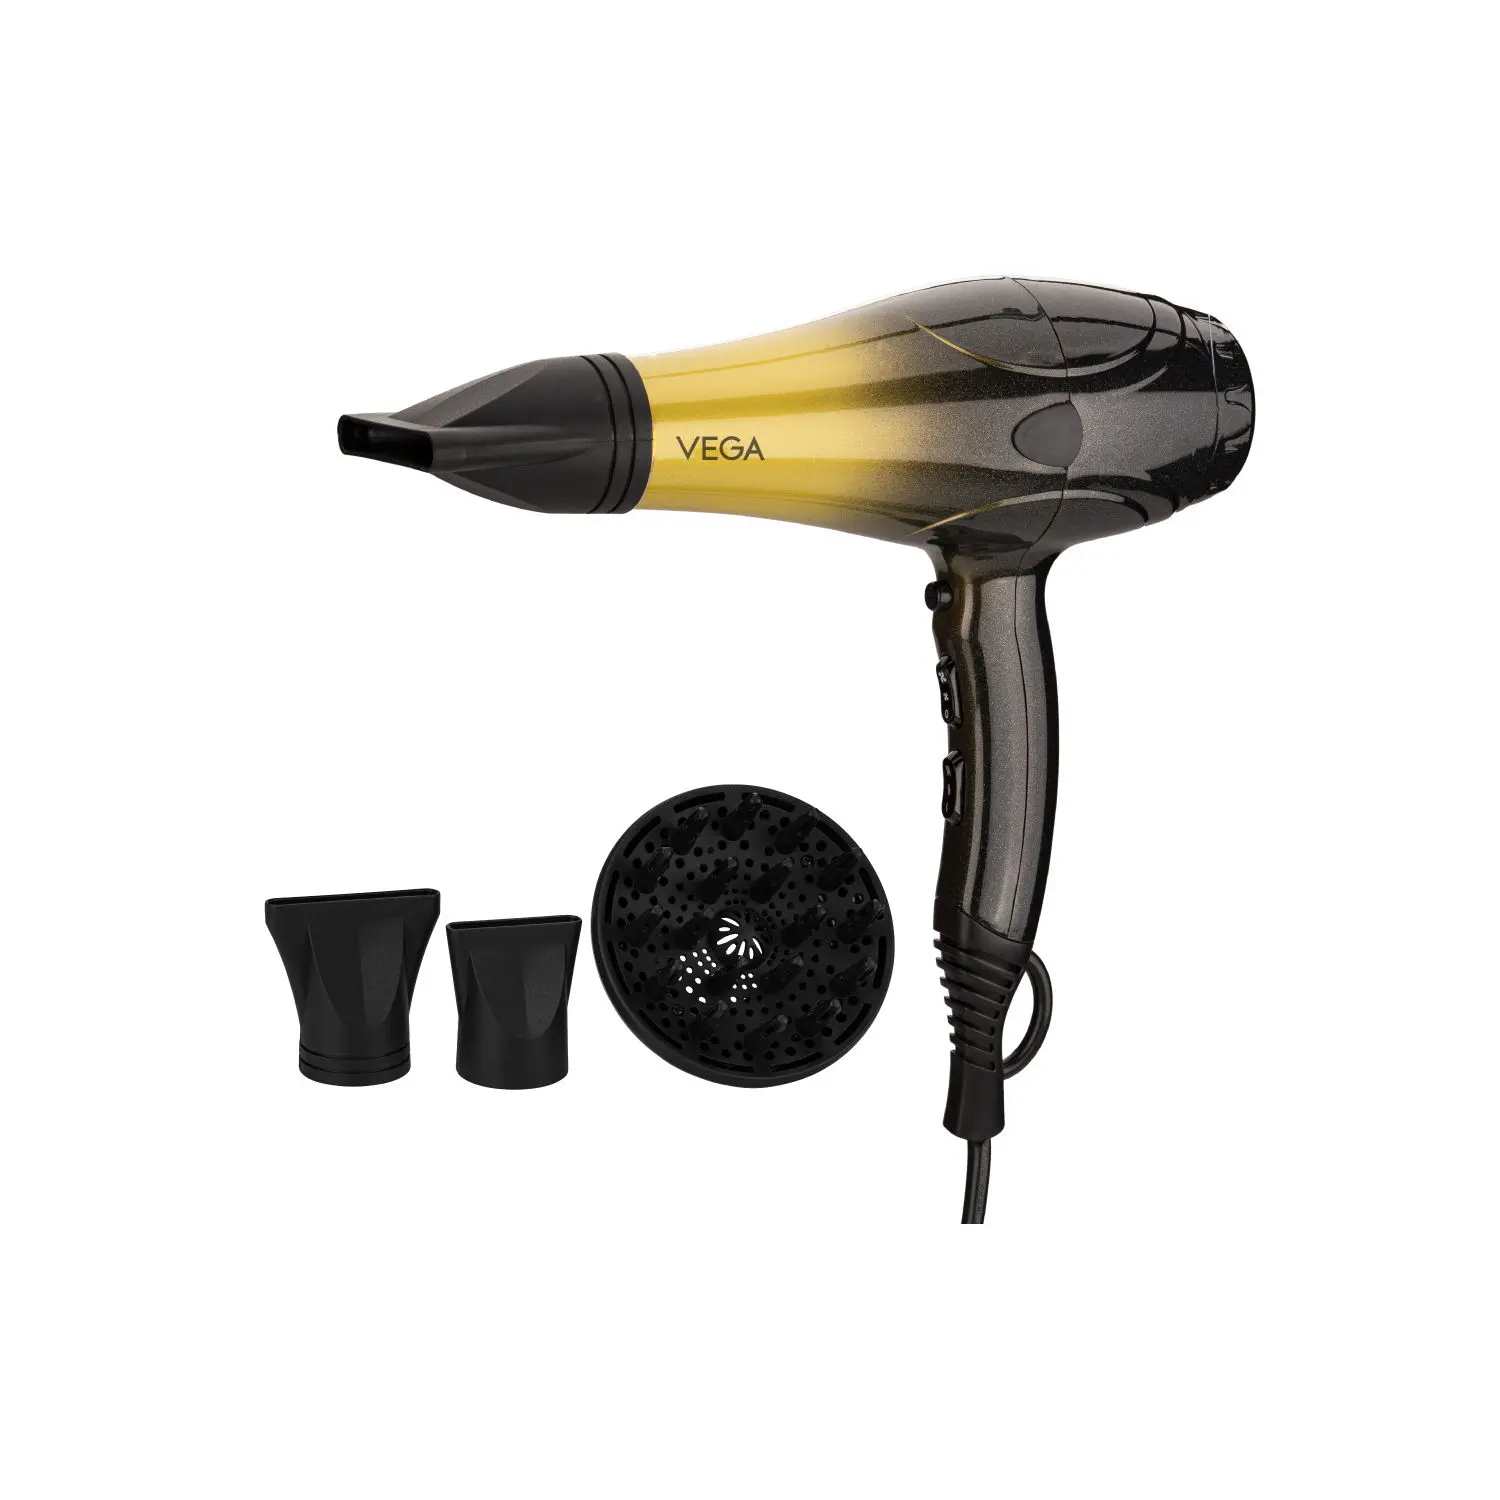 VEGA Super Pro 2400 Watts Professional Hair Dryer With Diffuser, 2 Detachable Nozzle & Travel Pouch (VHDP-04)-Black